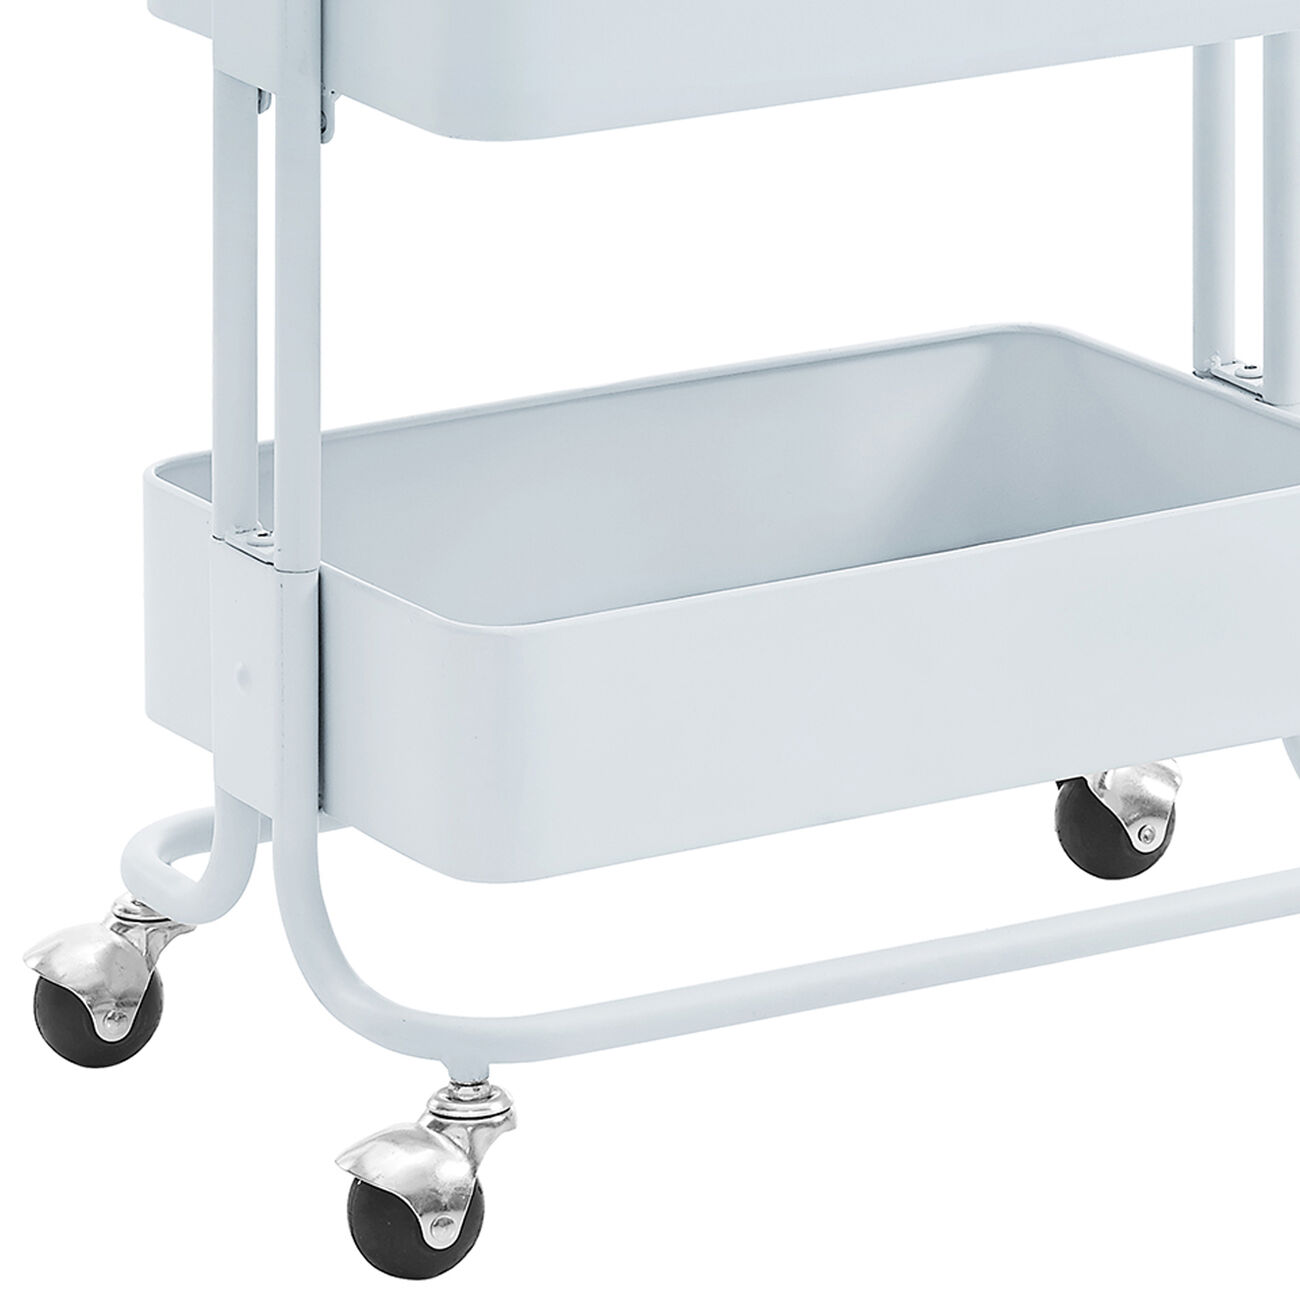 3 Tier Metal Cart with Tubular Frame and Spacious Storage, White